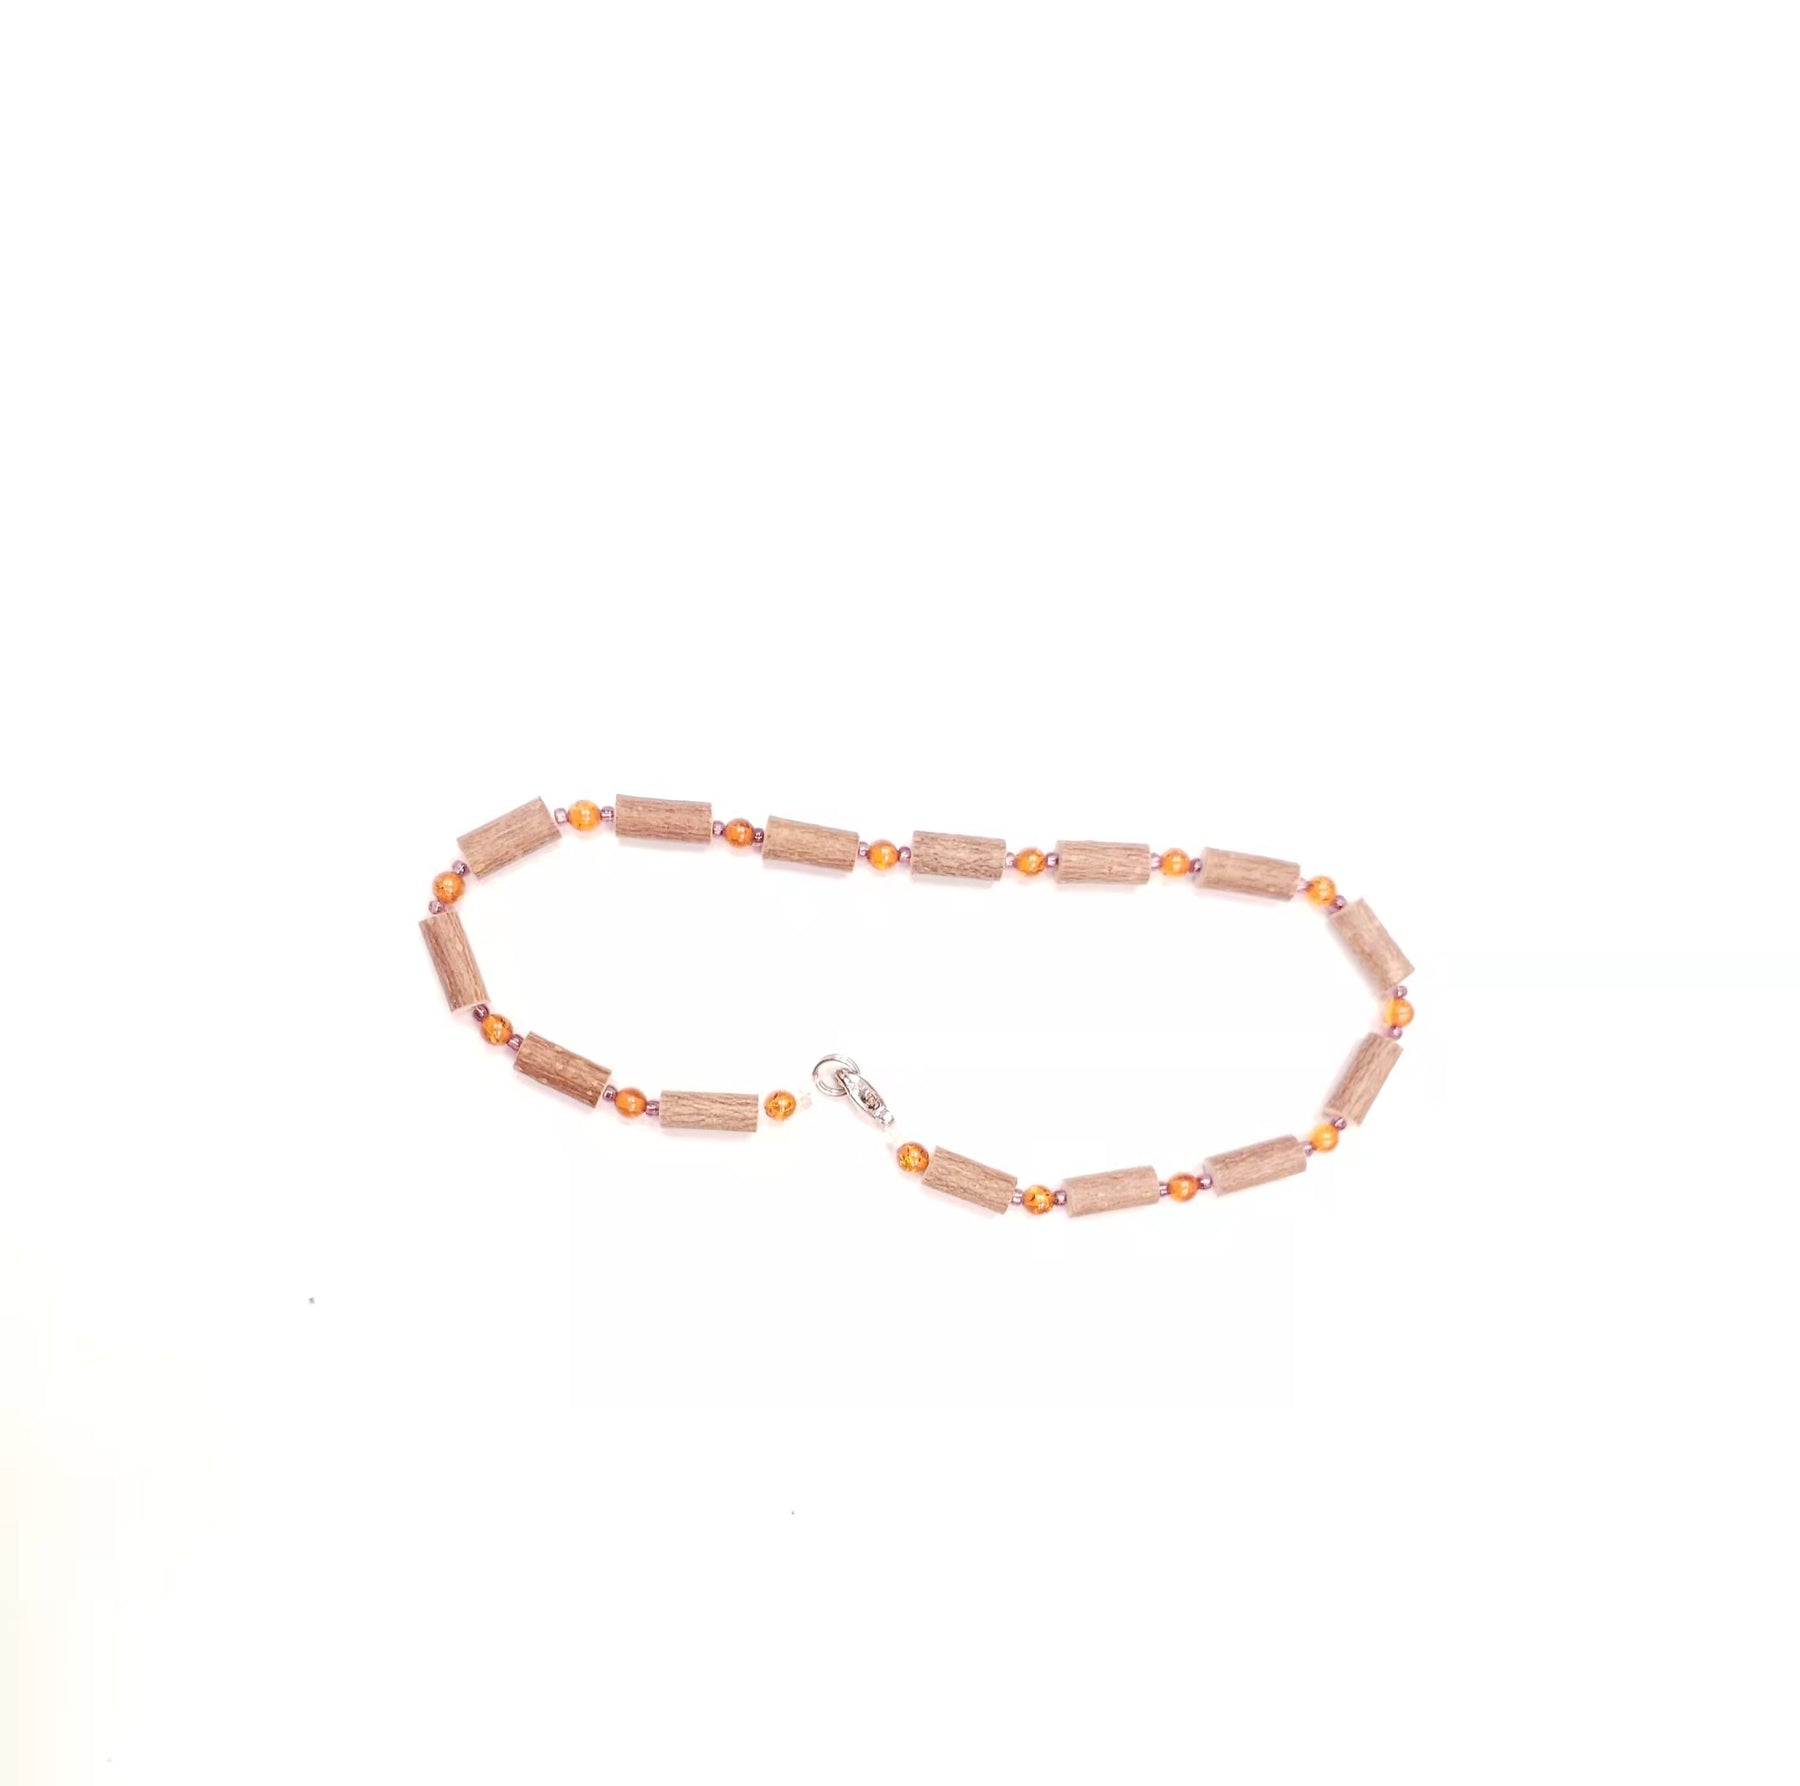 Bienfaits Noisetier/Healing Hazel Amber Teething Necklace-11 Inches - Pink